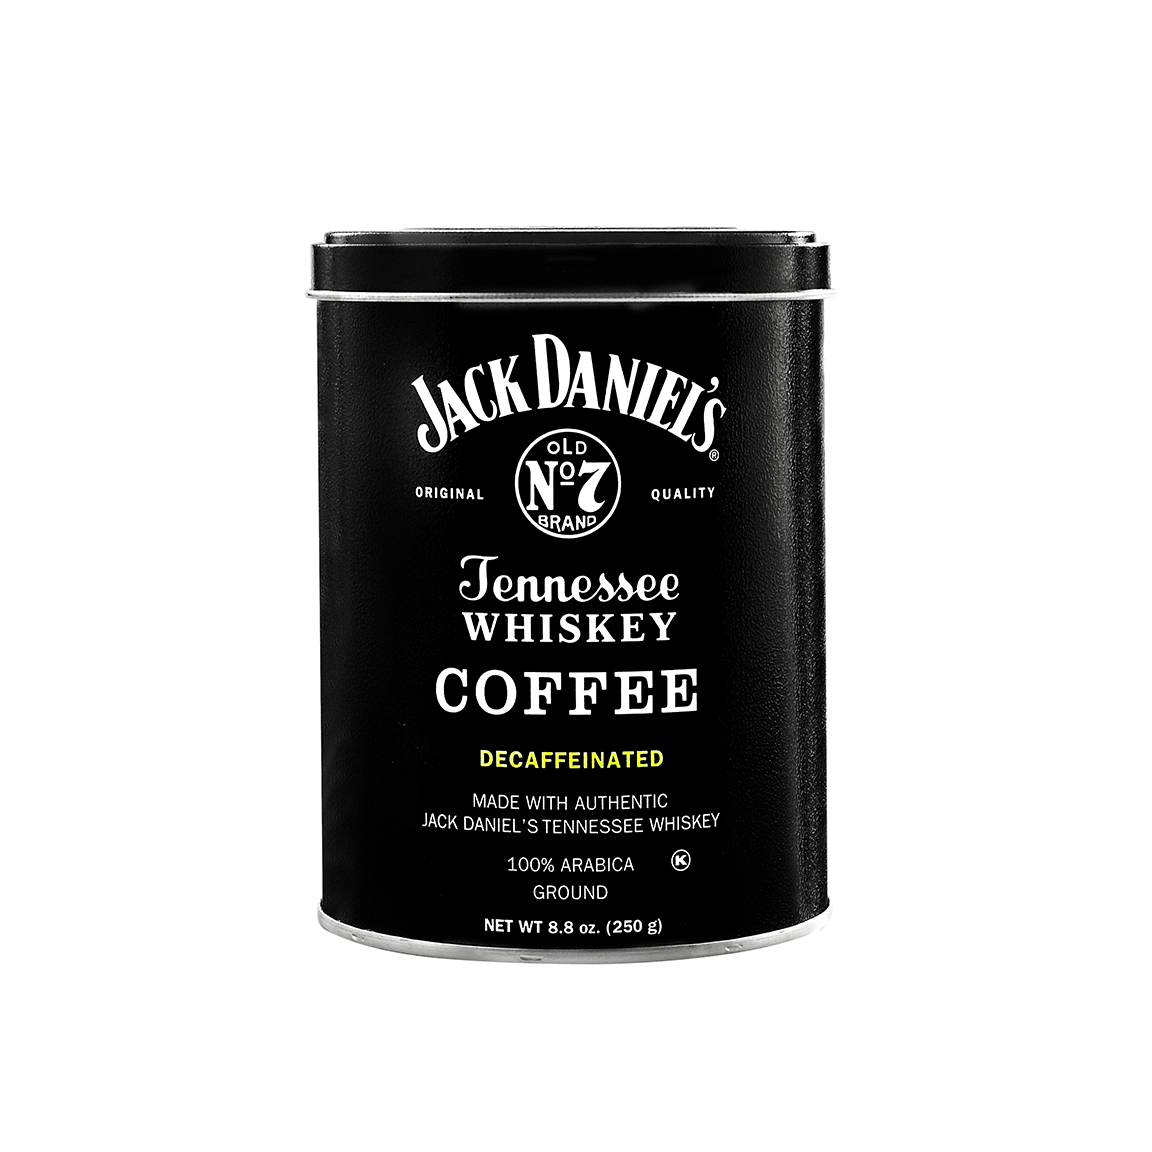 Leerling Ass hersenen Jack Daniel's Coffee